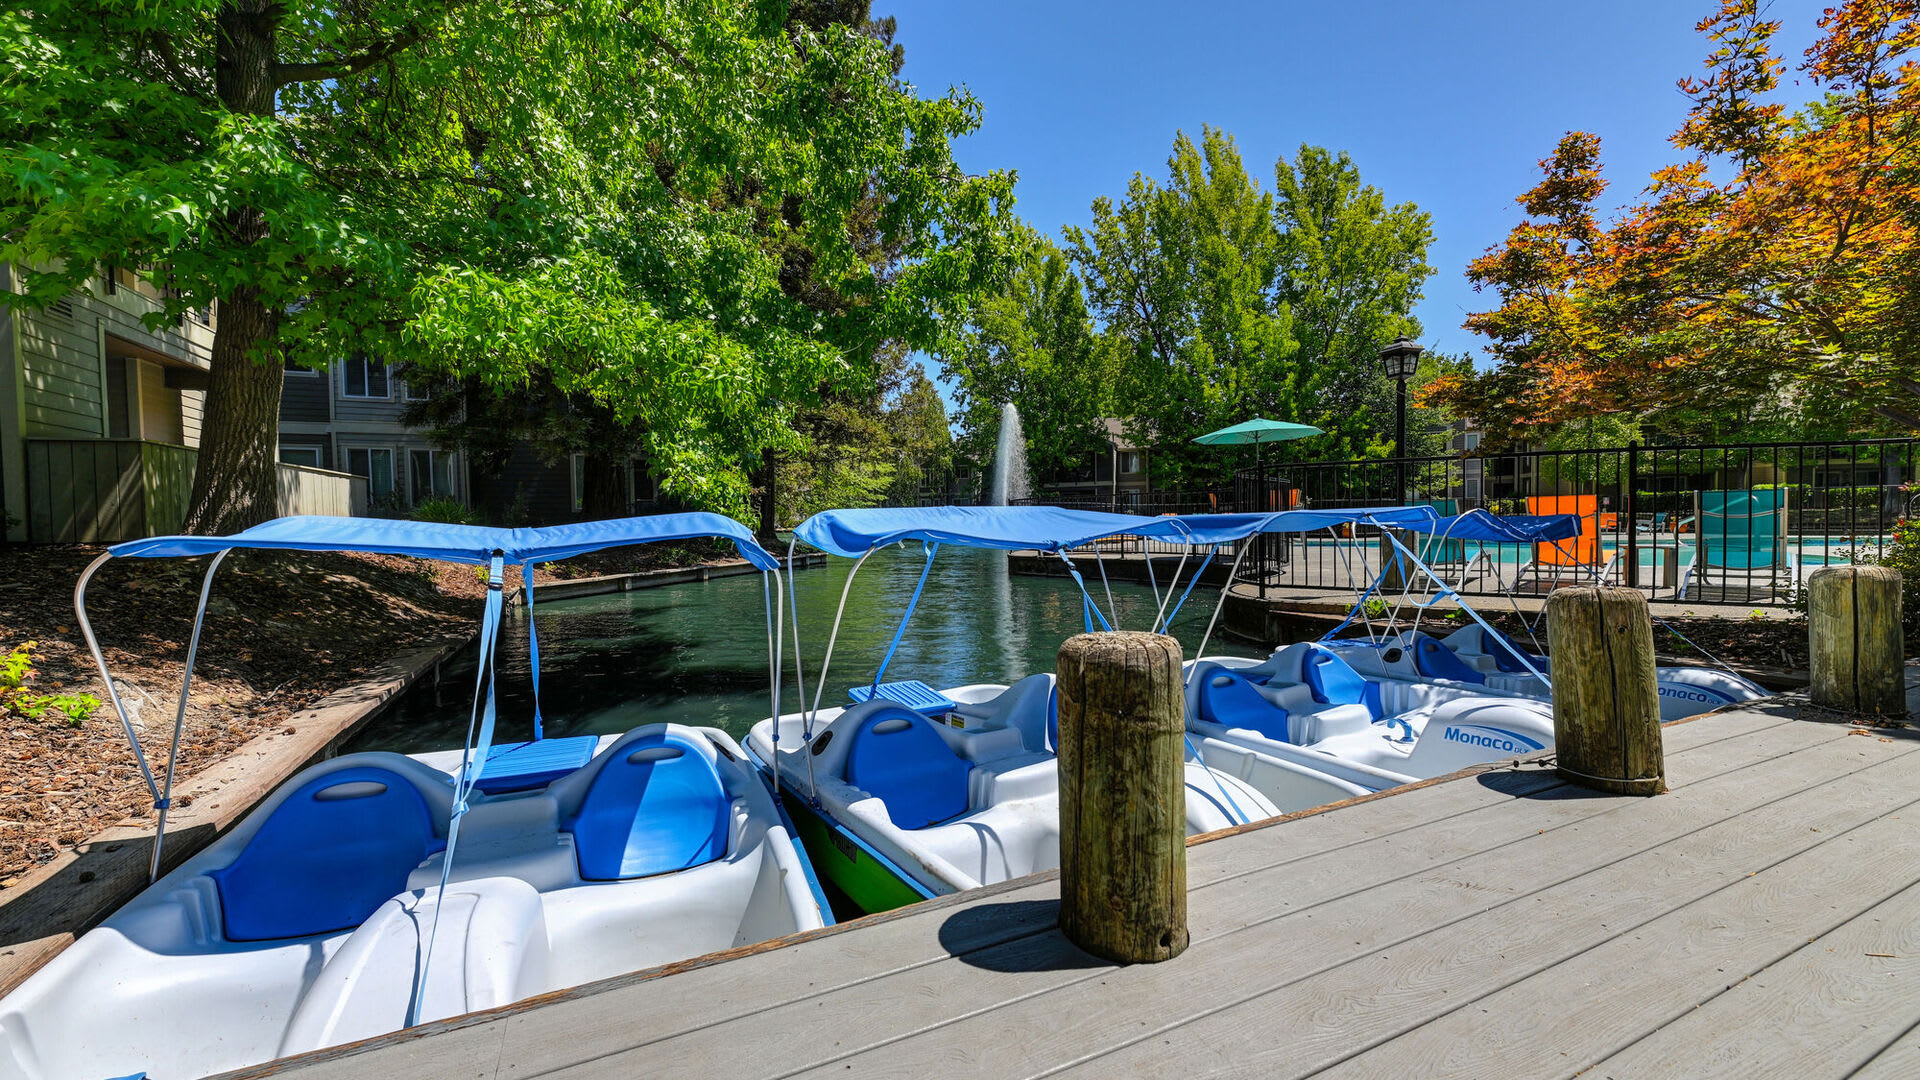 Peddle boats at Harbor Oaks Apartments in Sacramento, California